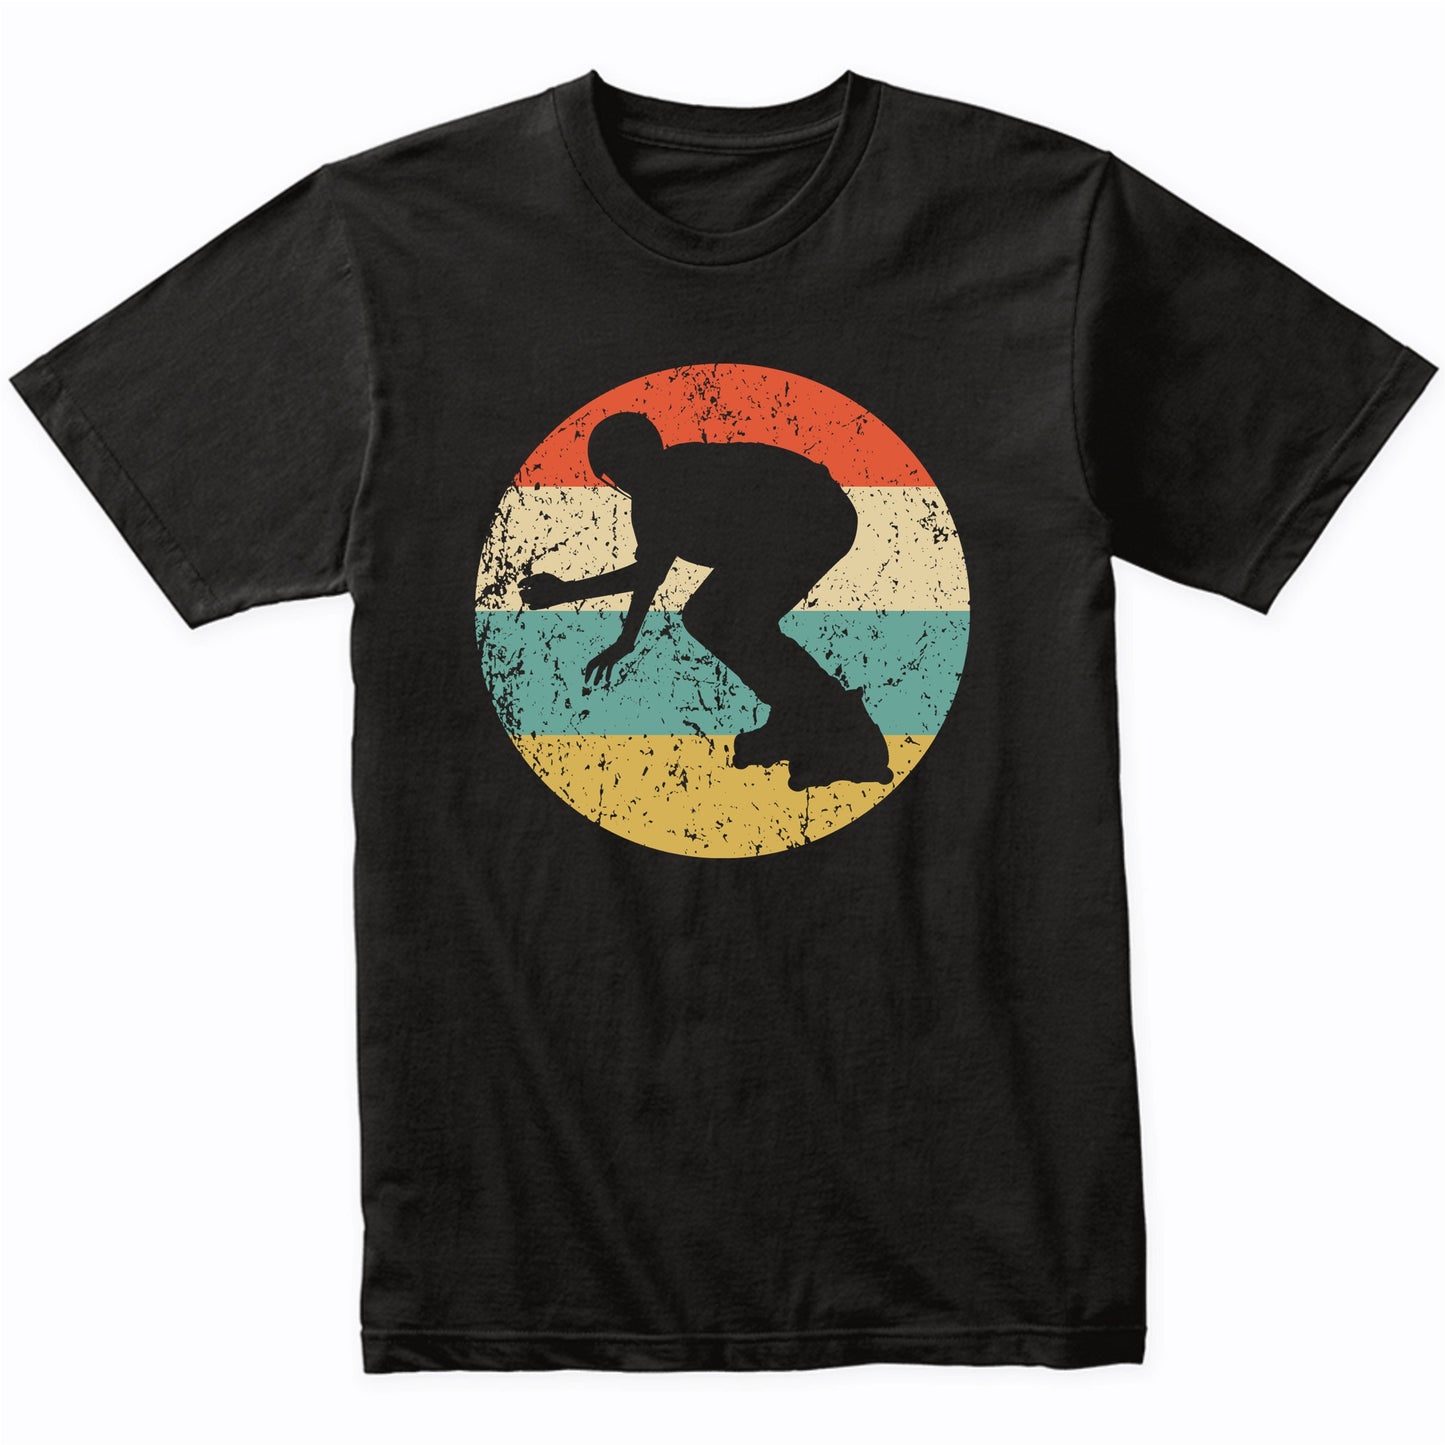 Inline Skating Shirt - Vintage Retro Skater T-Shirt